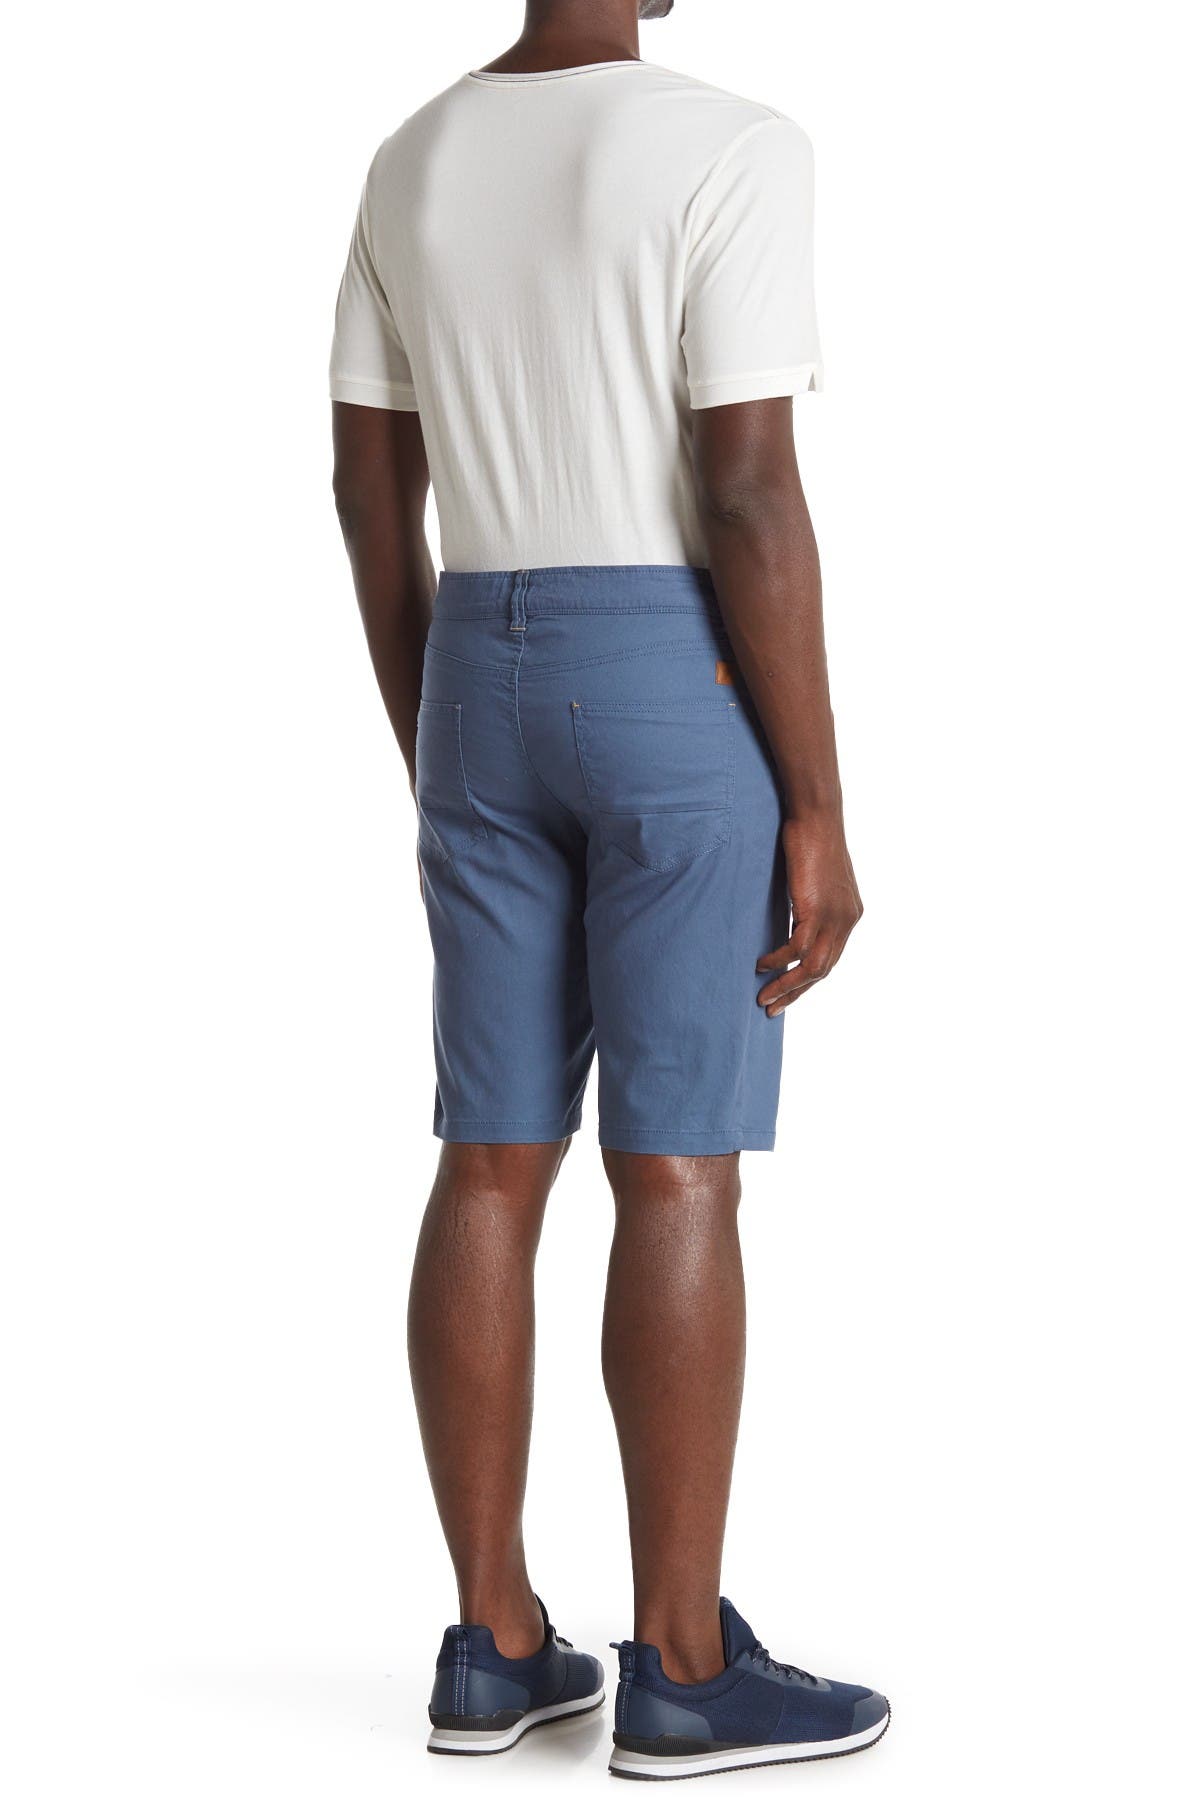 Fundamental Coast Santa Cruz Vintage-style Shorts In Medium Blue1